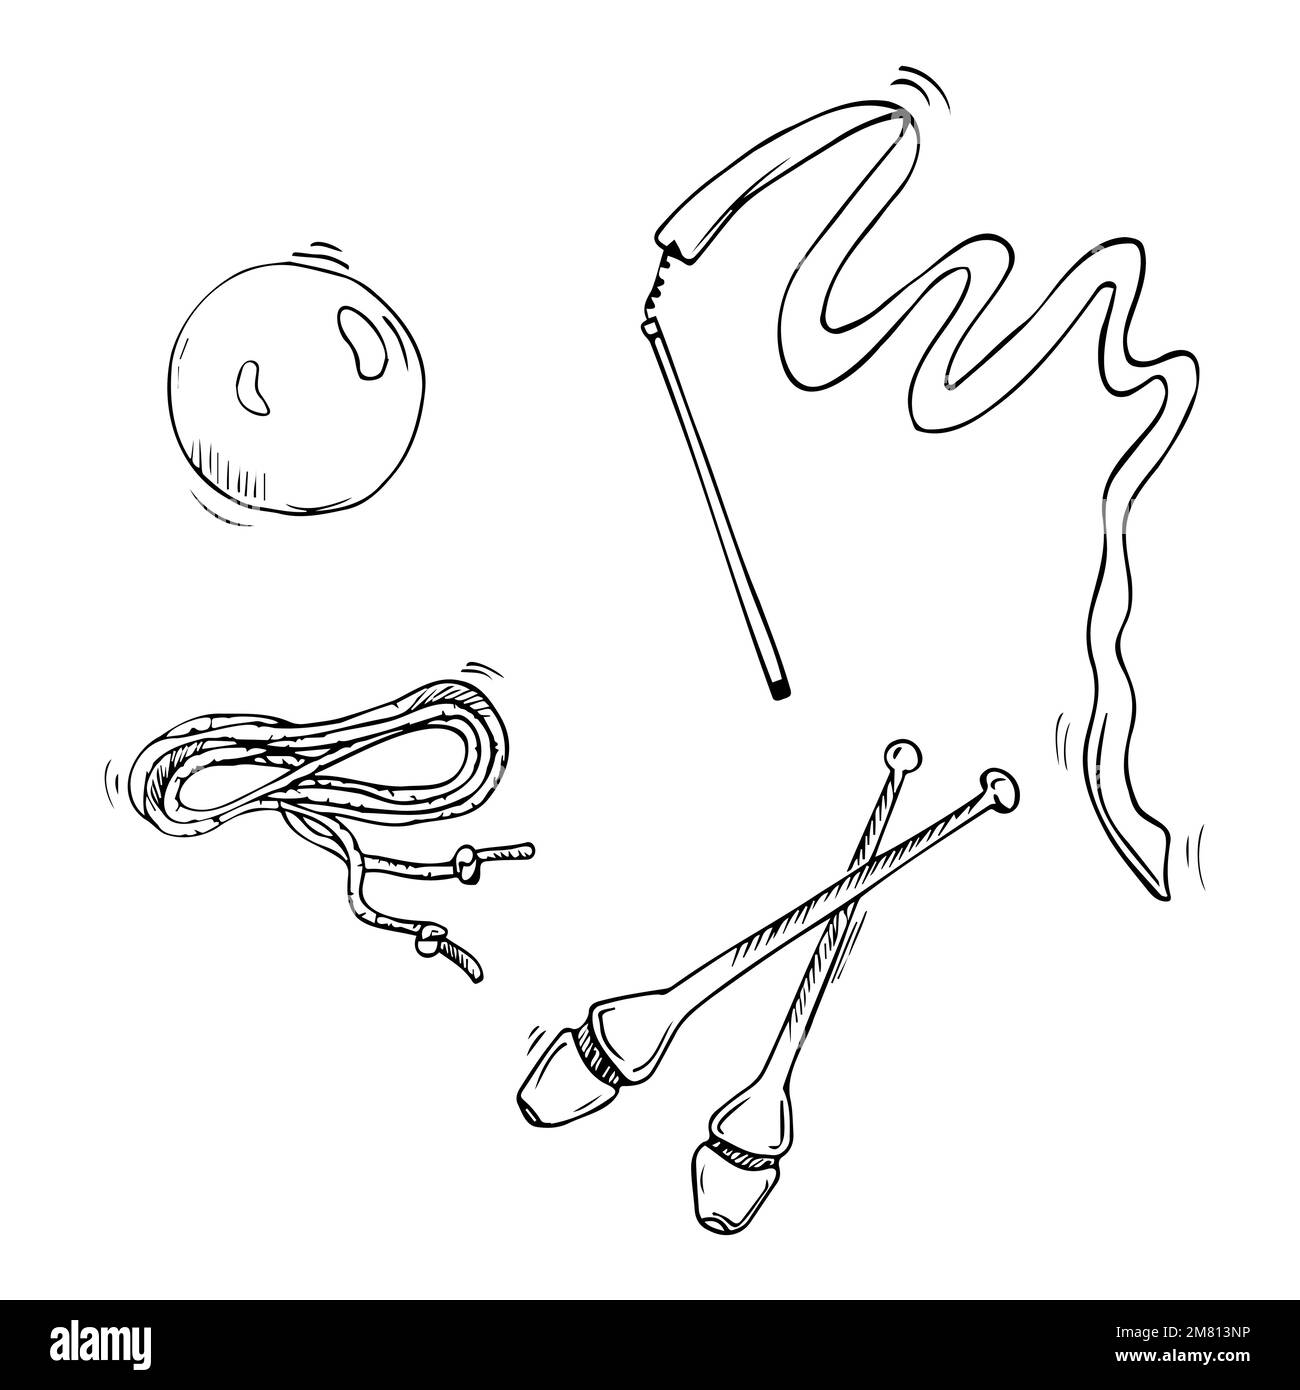 https://c8.alamy.com/comp/2M813NP/vector-doodle-rhythmic-gymnastics-equipment-set-line-art-skipping-rope-sportwear-clubs-halfshoes-illustrations-2M813NP.jpg